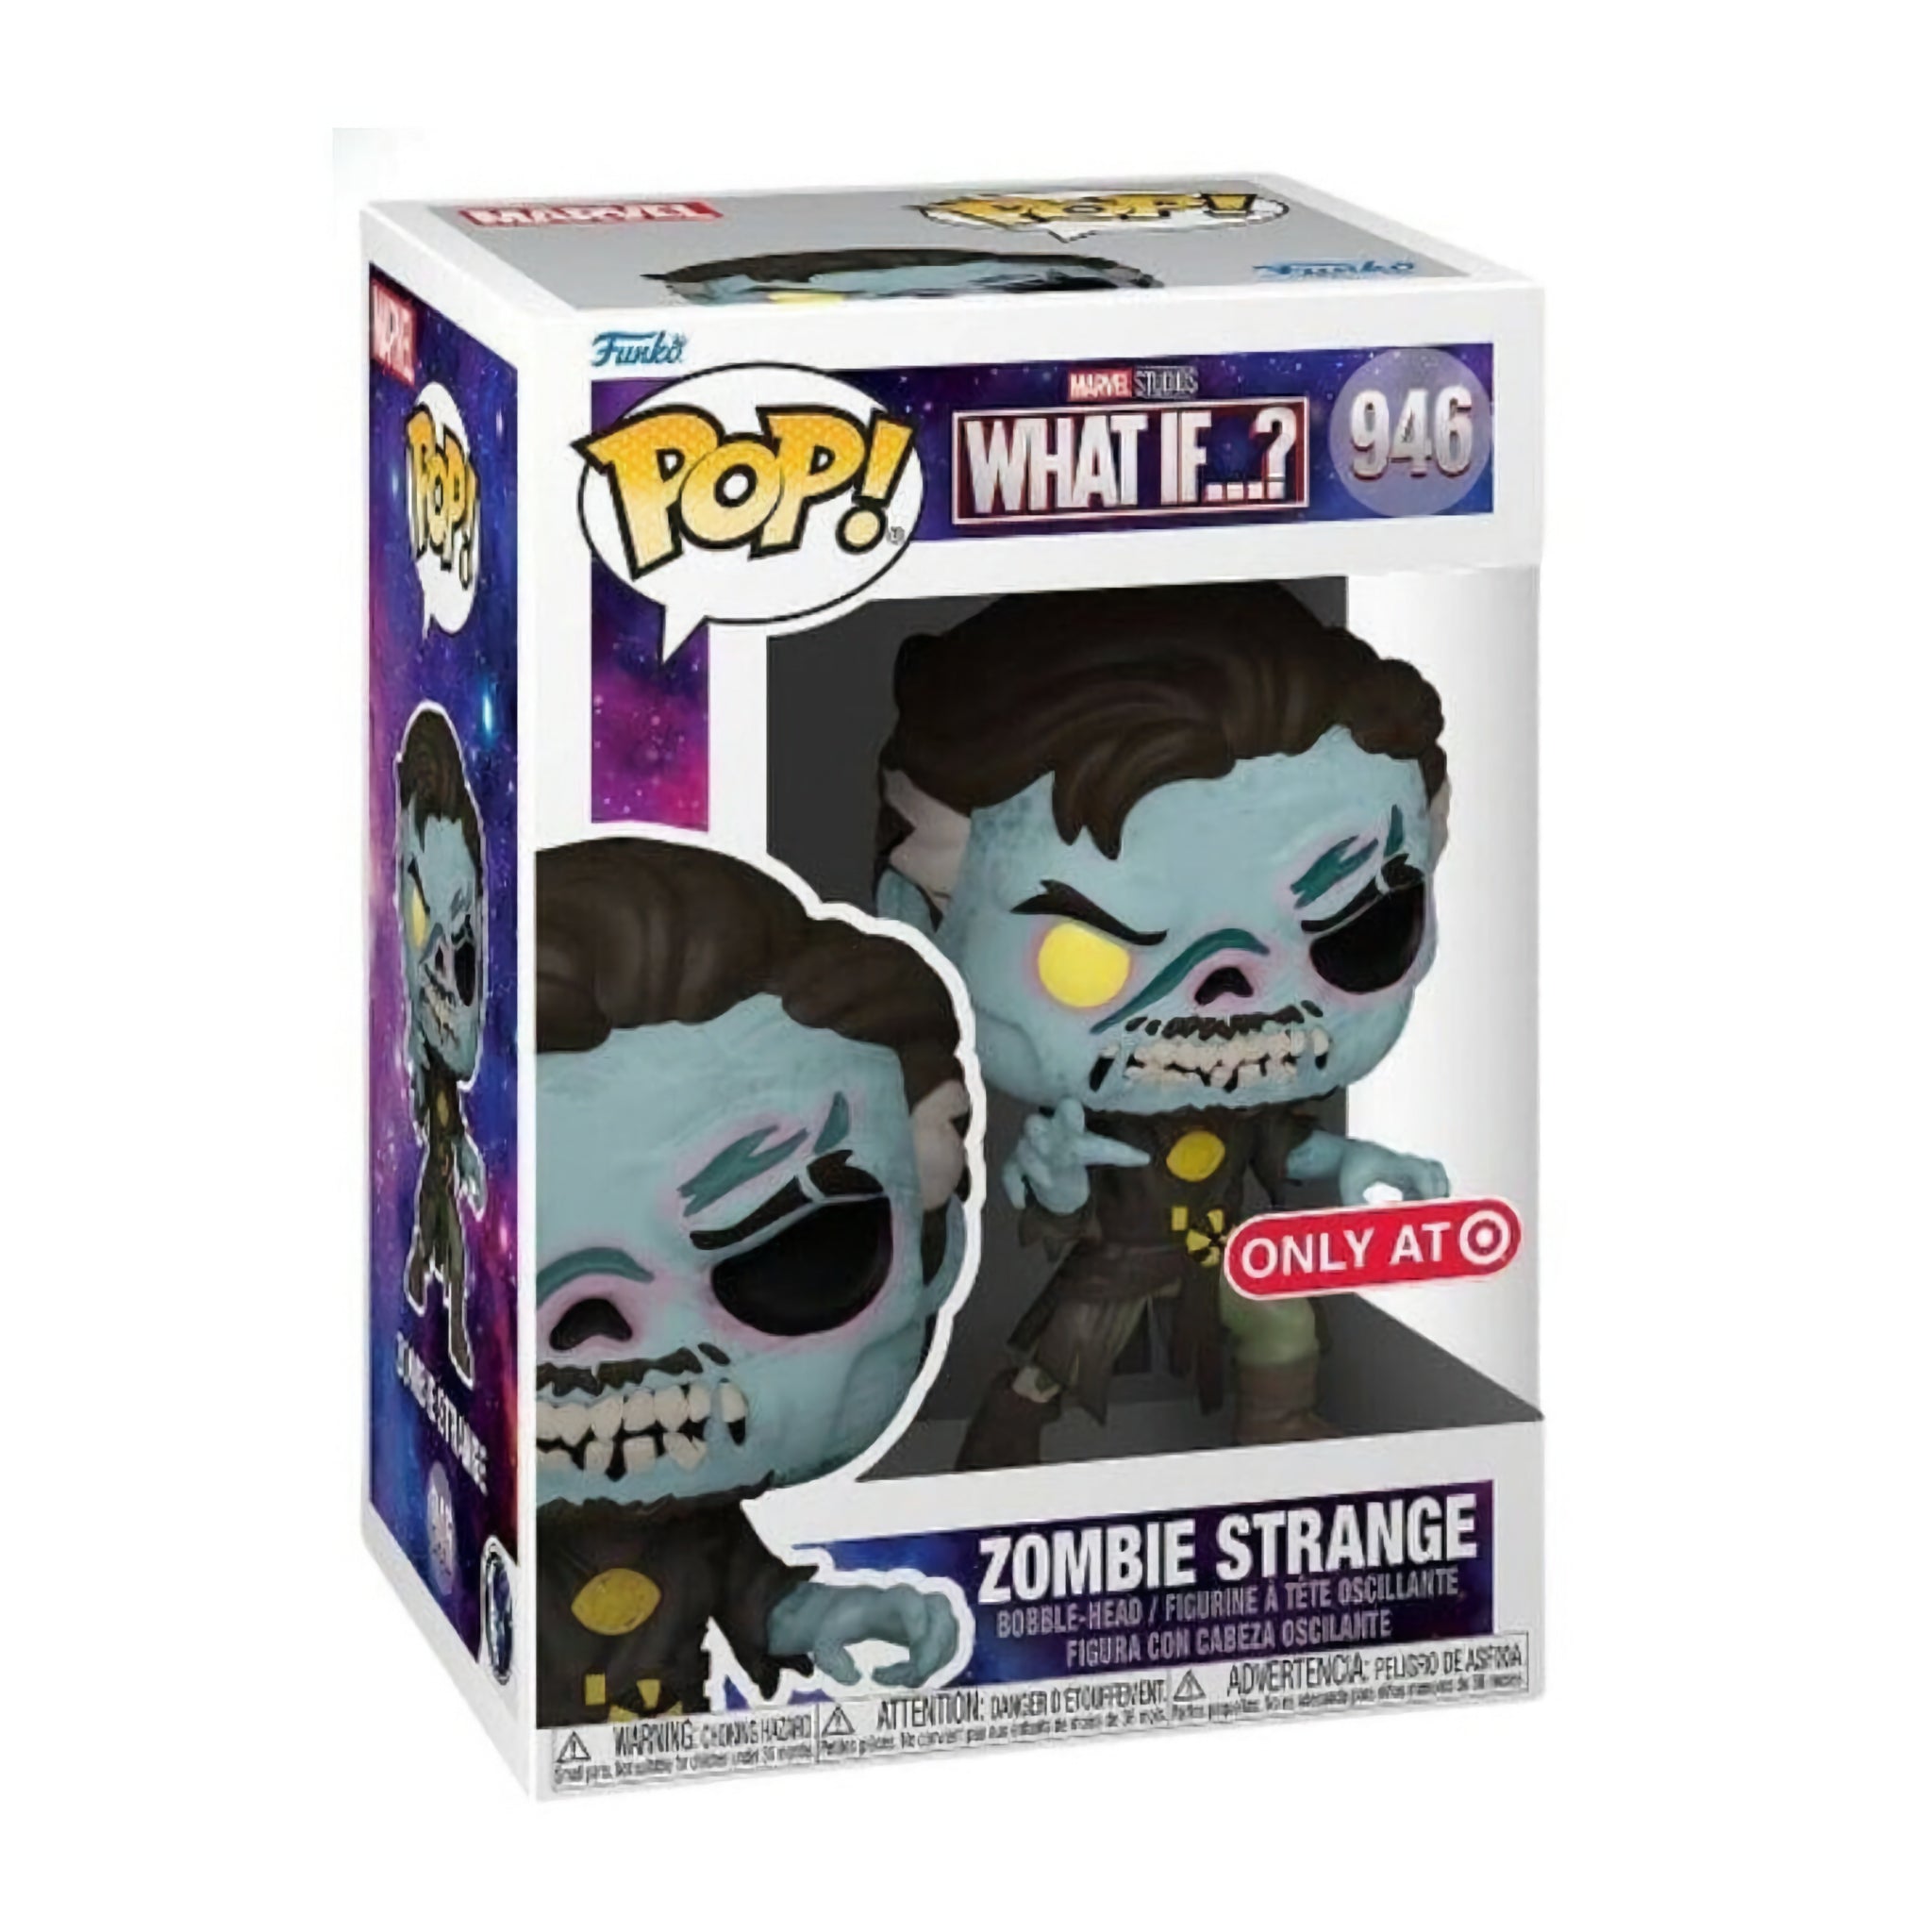 Zombie Strange Funko Pop! TARGET EXCLUSIVE